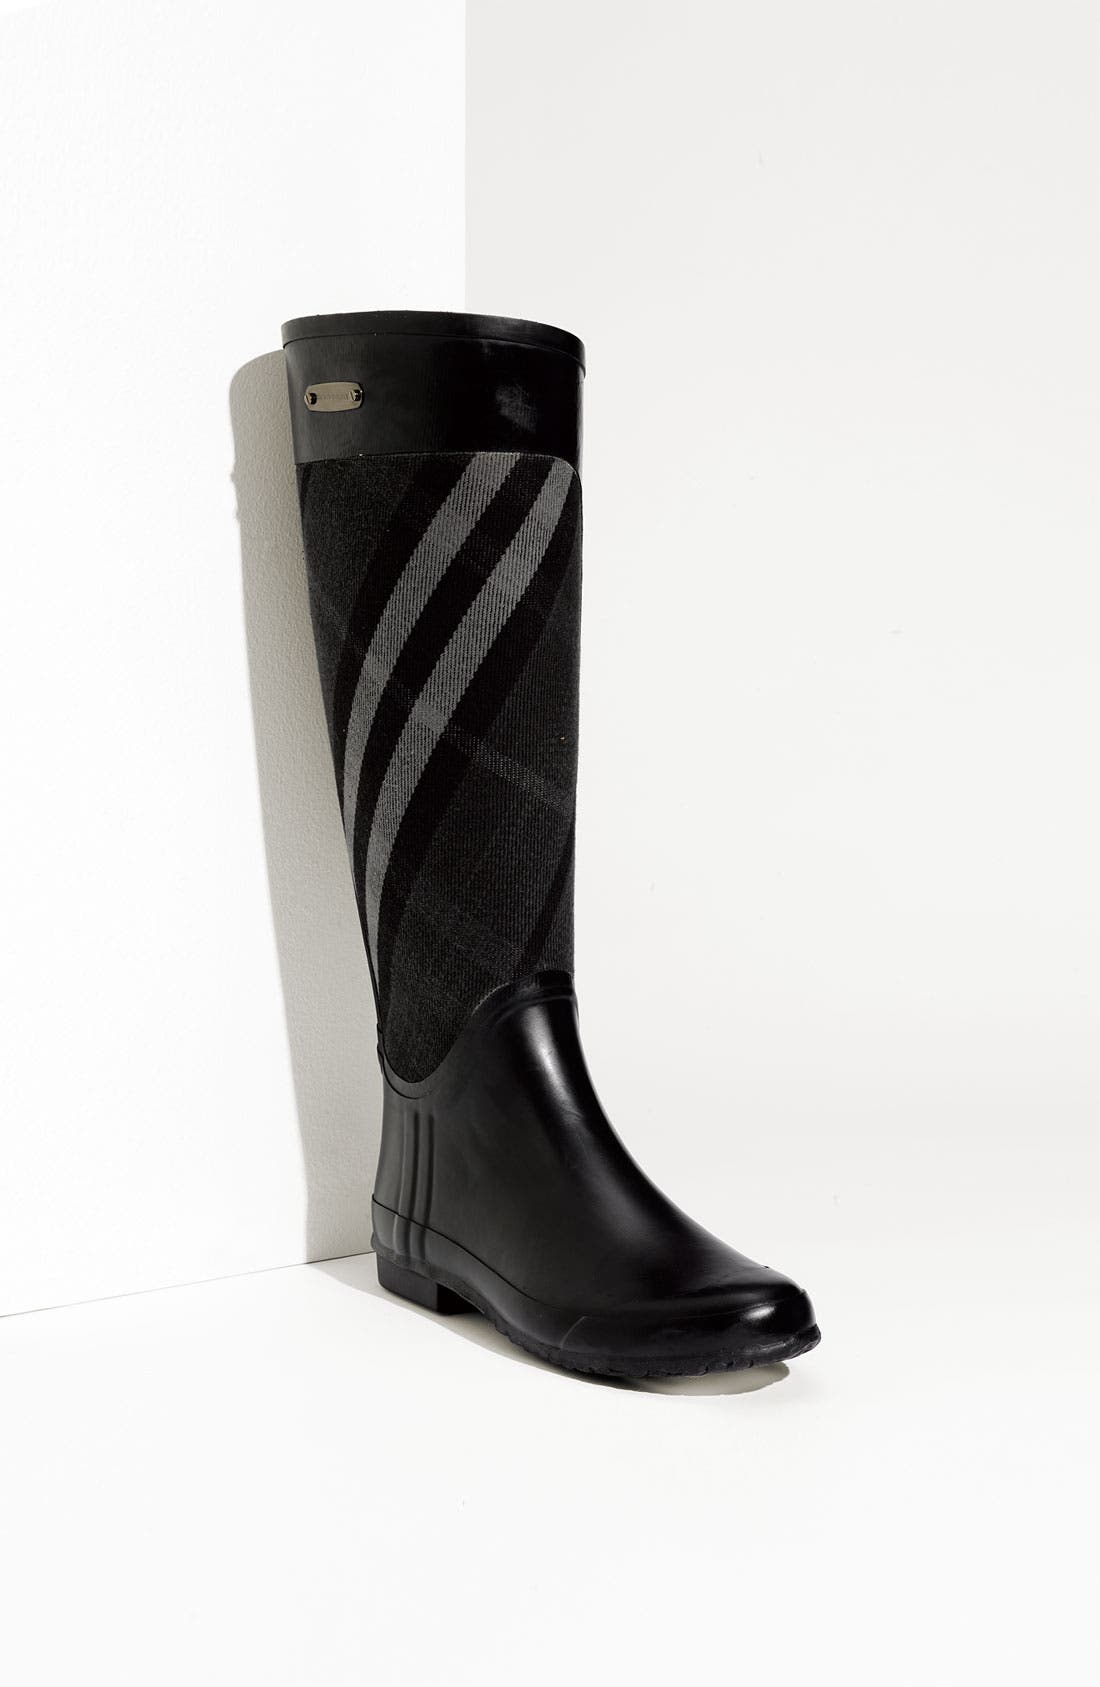 Burberry Tall Rain Boot, $225, Nordstrom